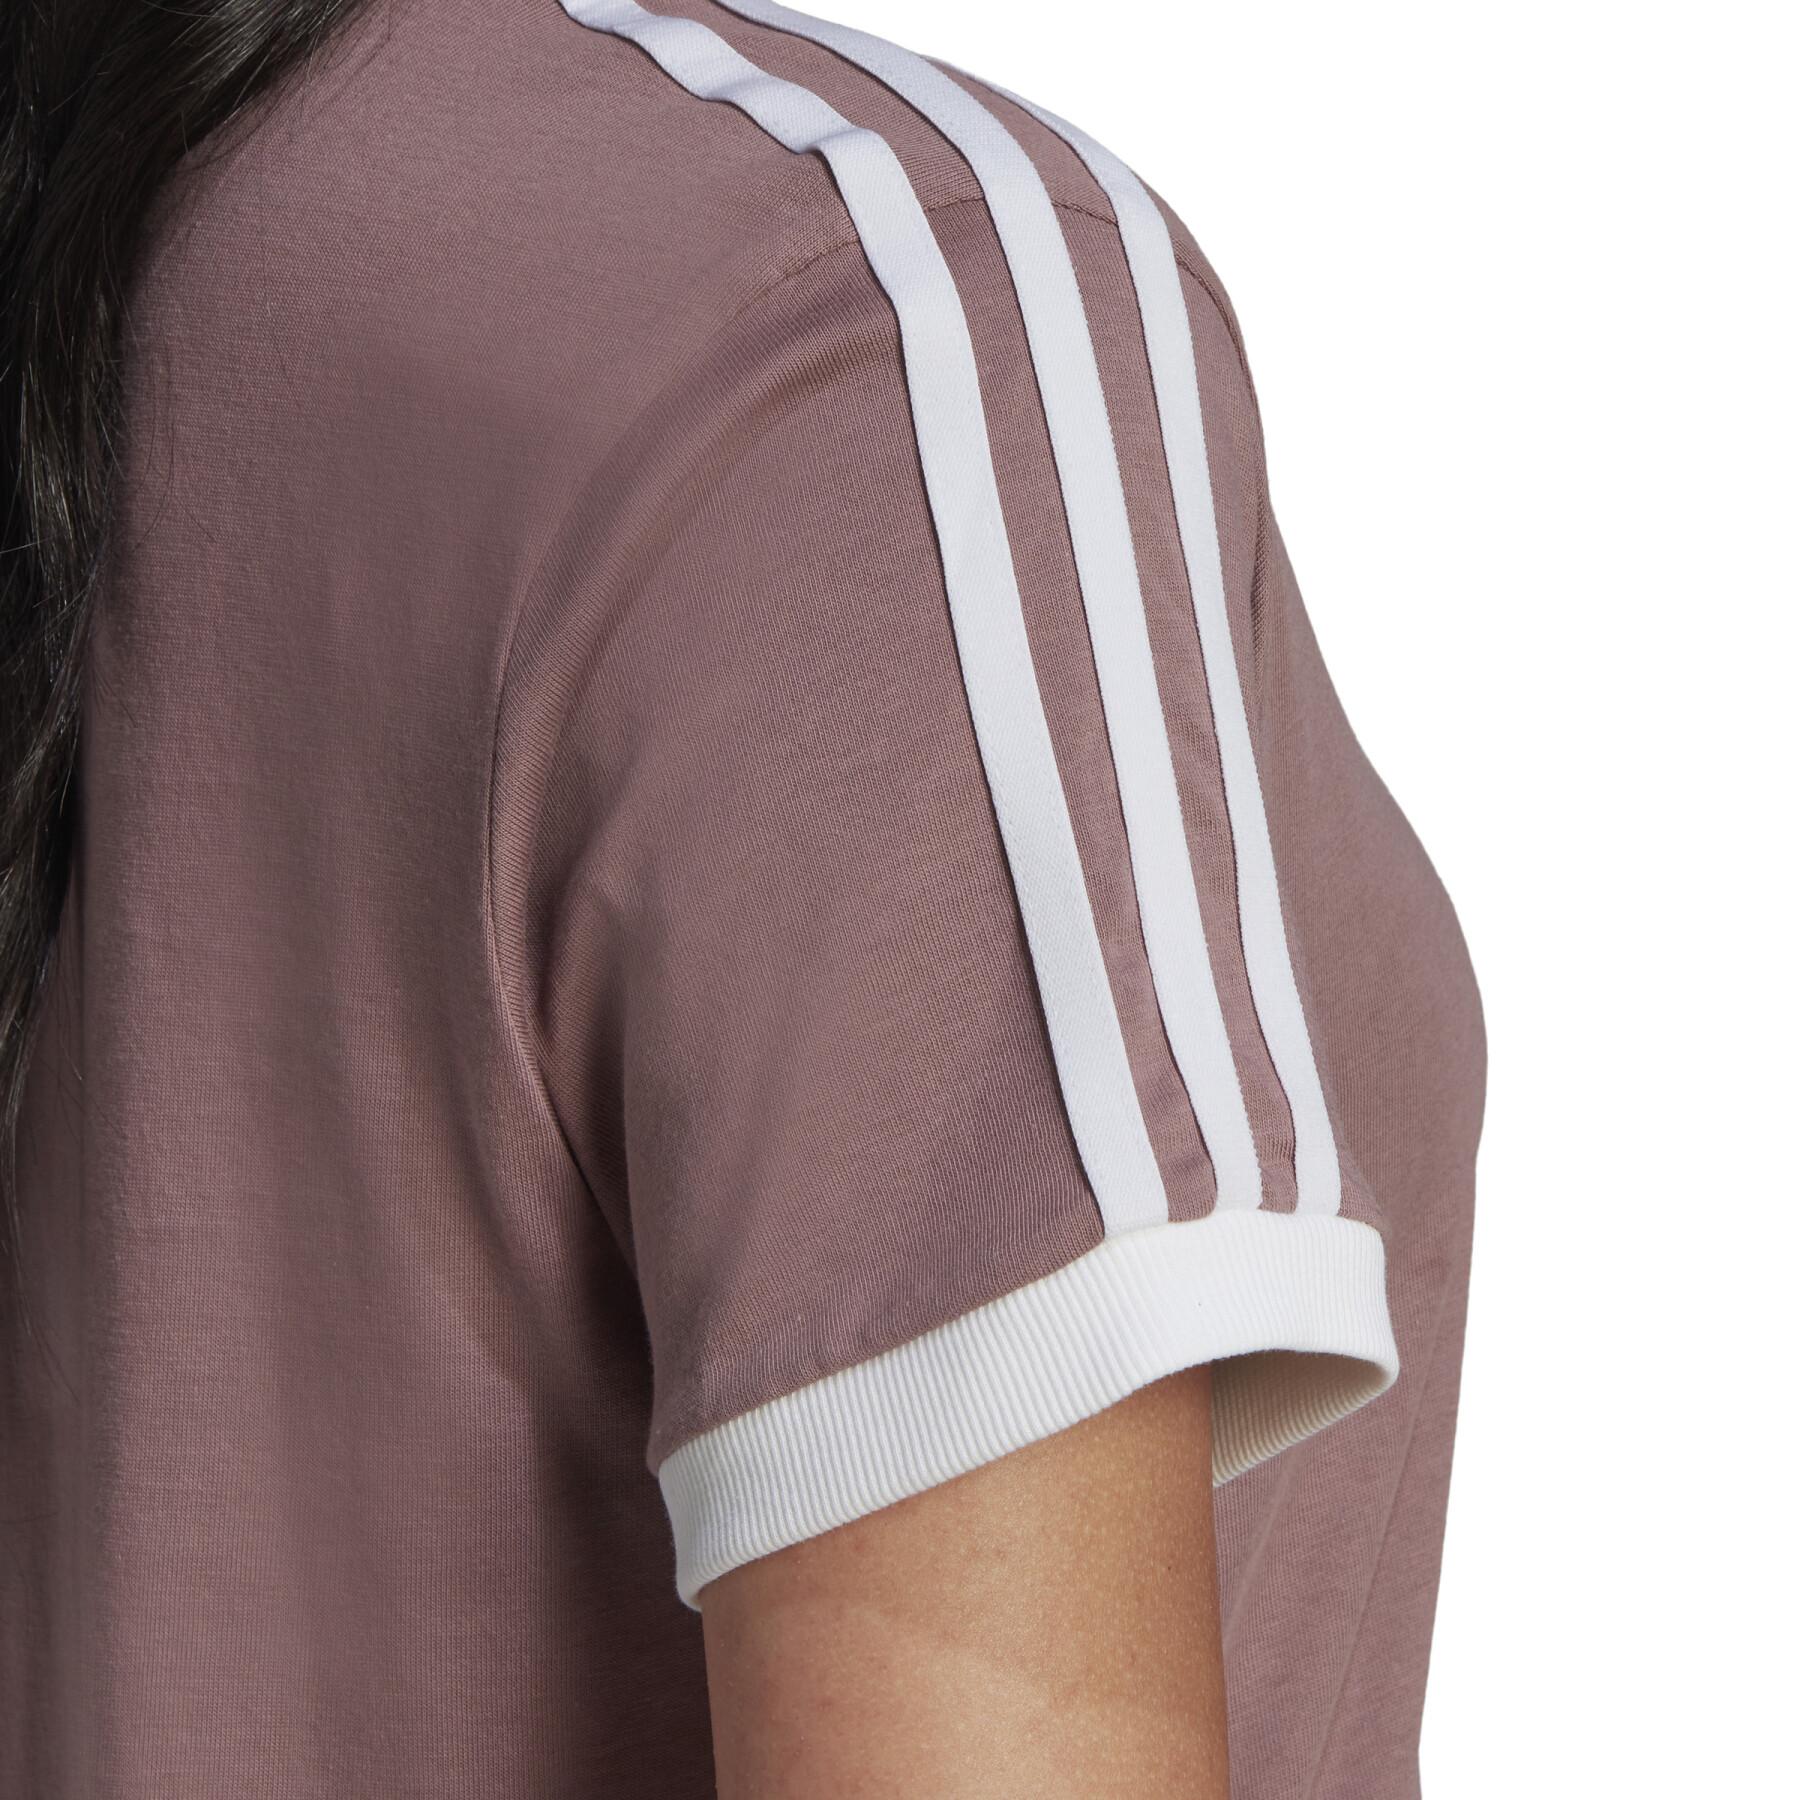 3-Streifen T-Shirt Frau adidas Originals Adicolor Classics